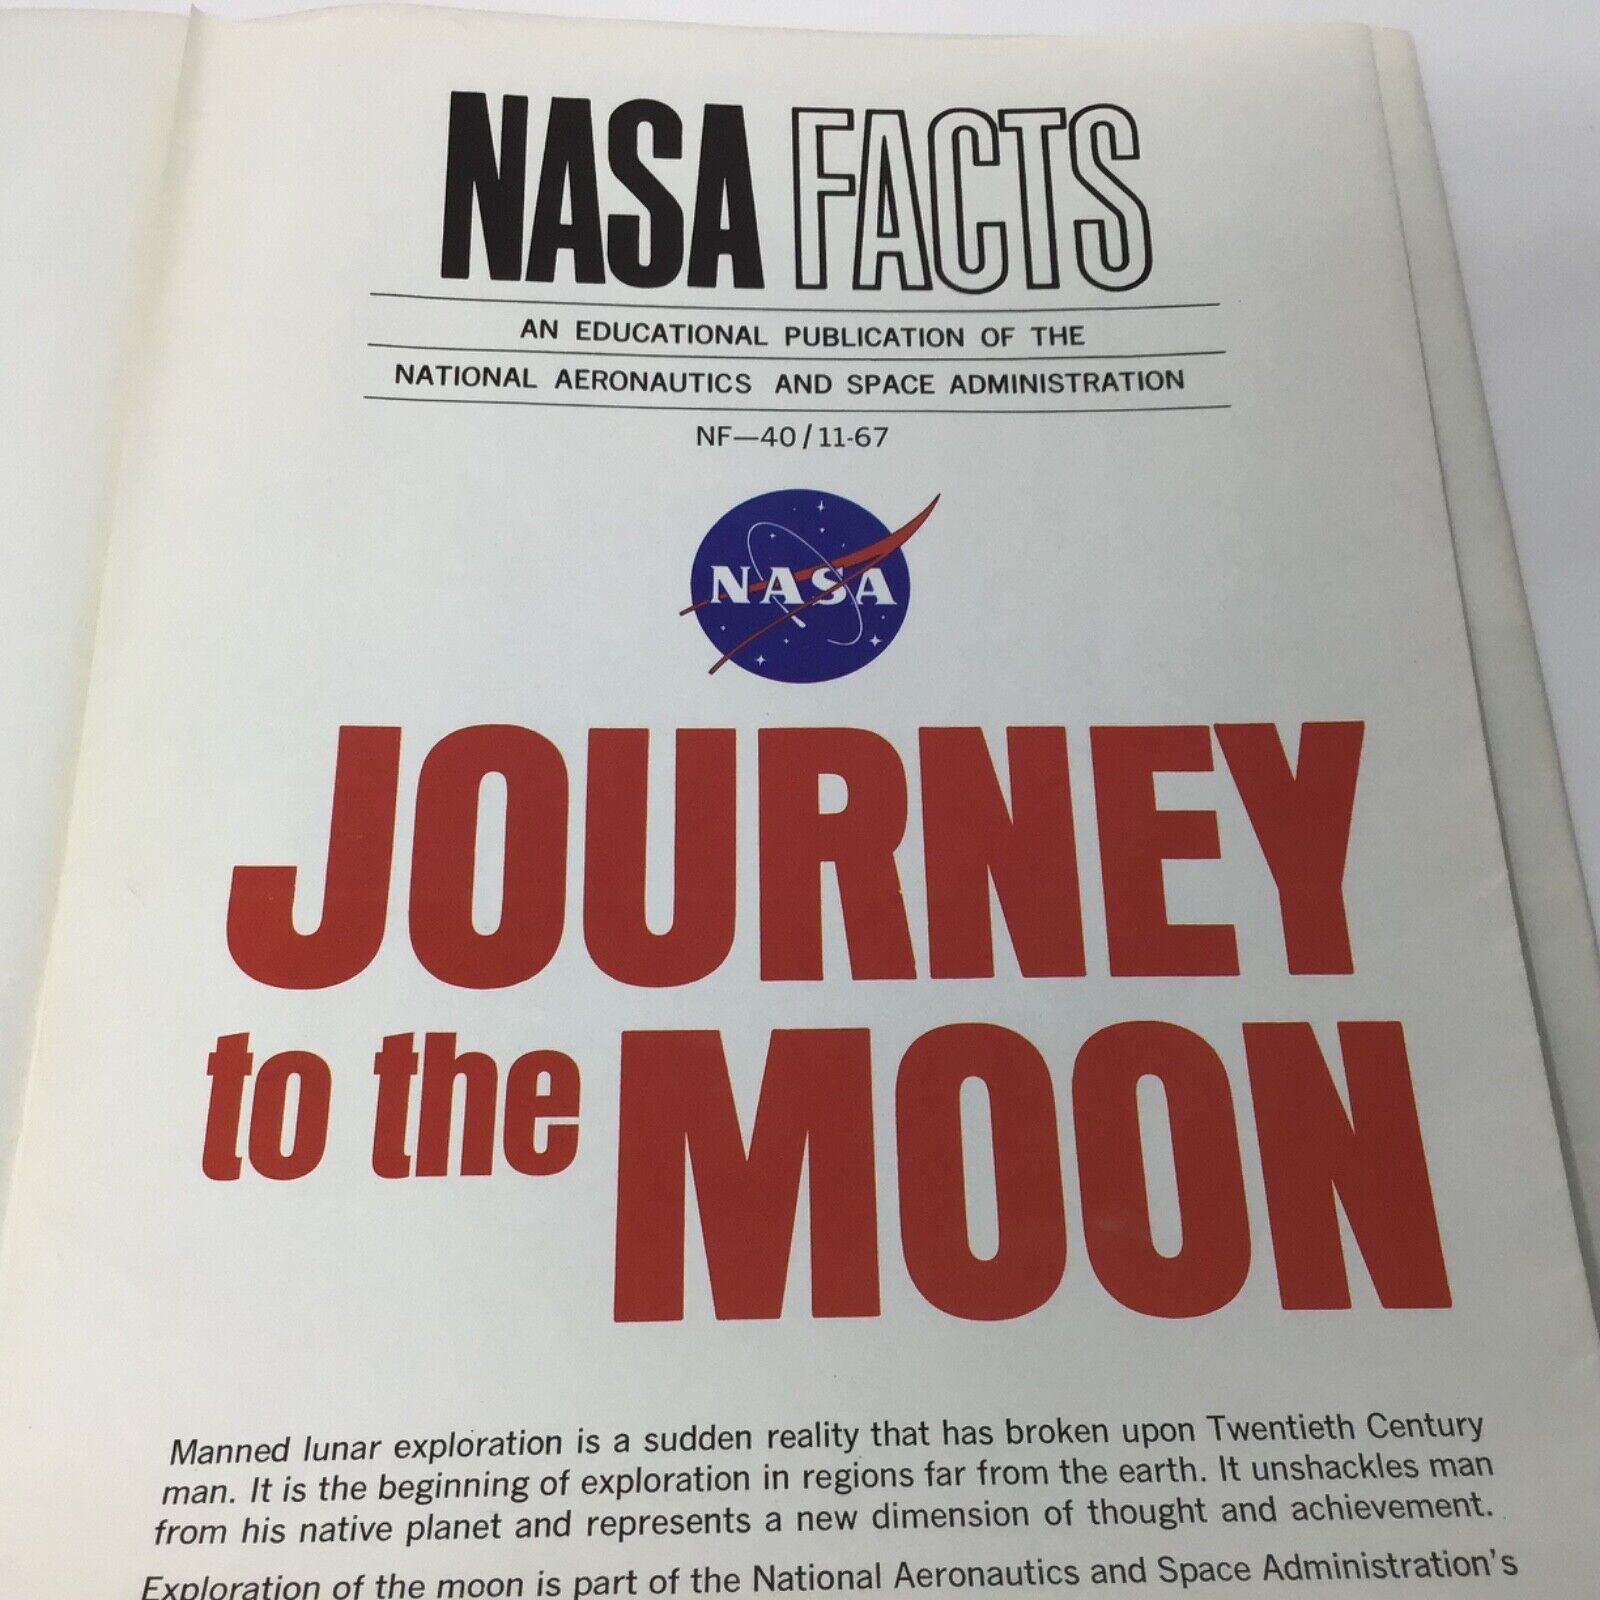 Journey to the Moon. NASA Facts, NF-40/11-67, 1967 November. Vintage NASA poster